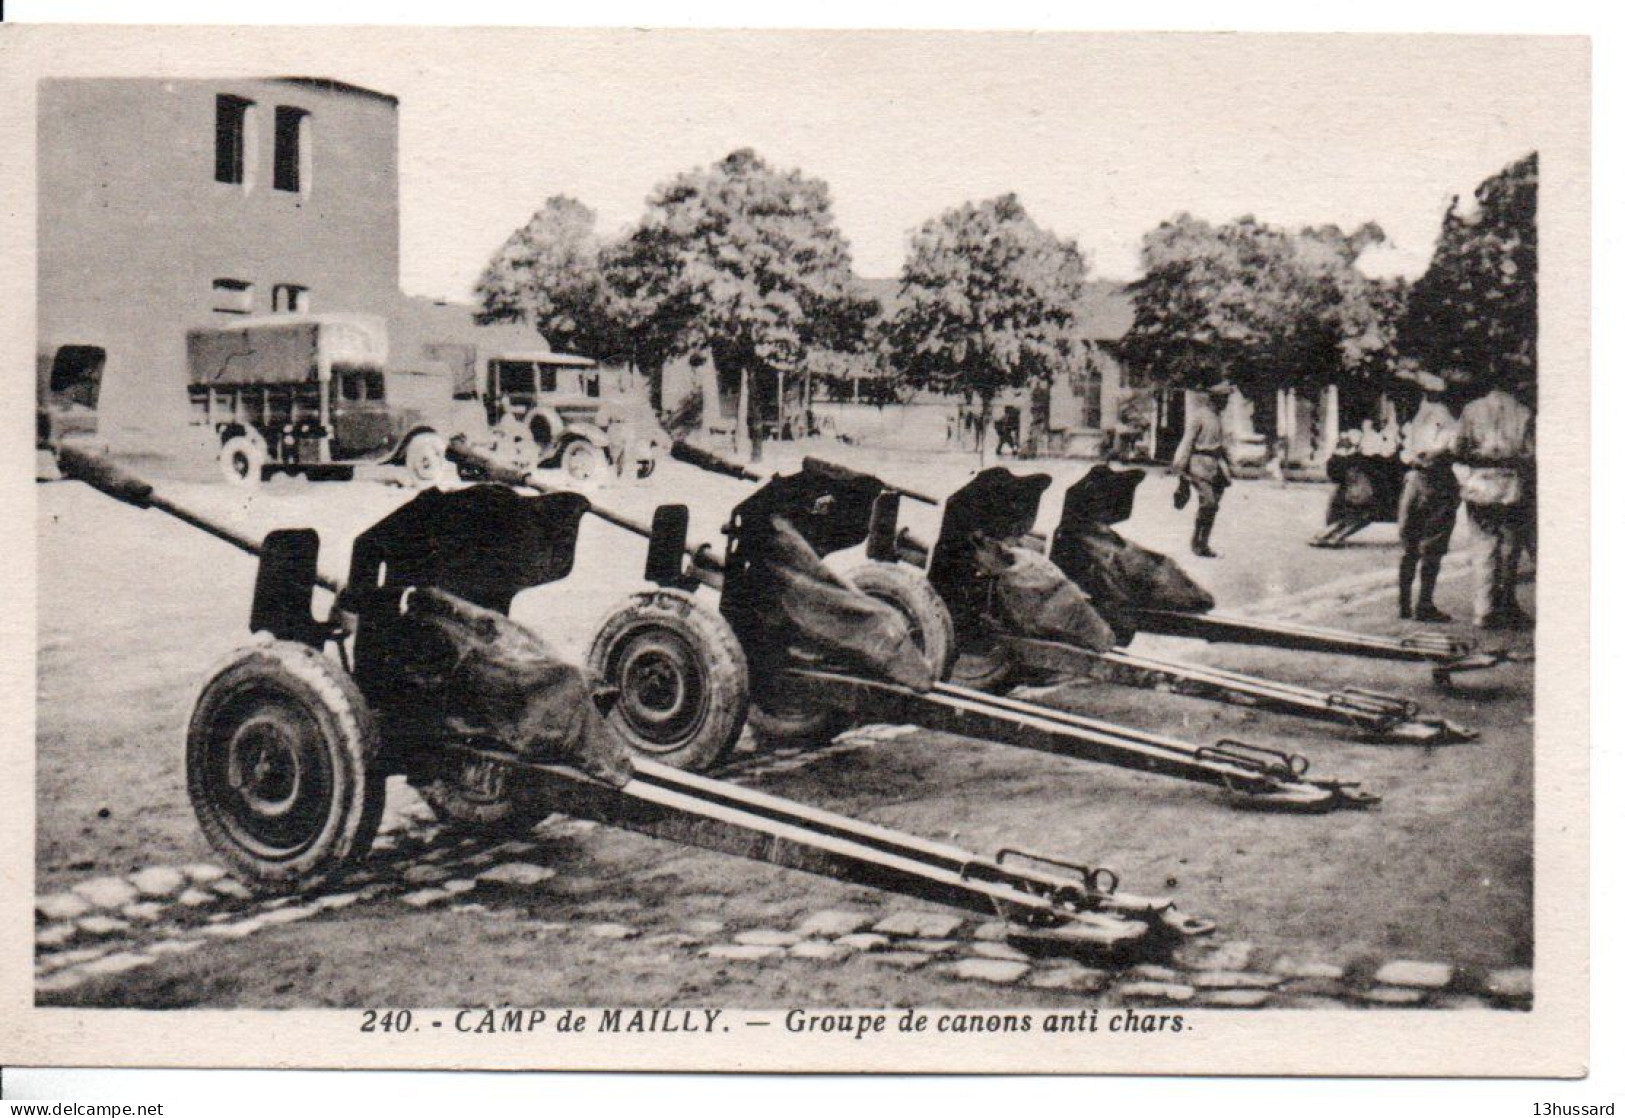 Carte Postale Ancienne Militaire - Camp De Mailly. Groupe De Canons Anti Chars - Artillerie - Material